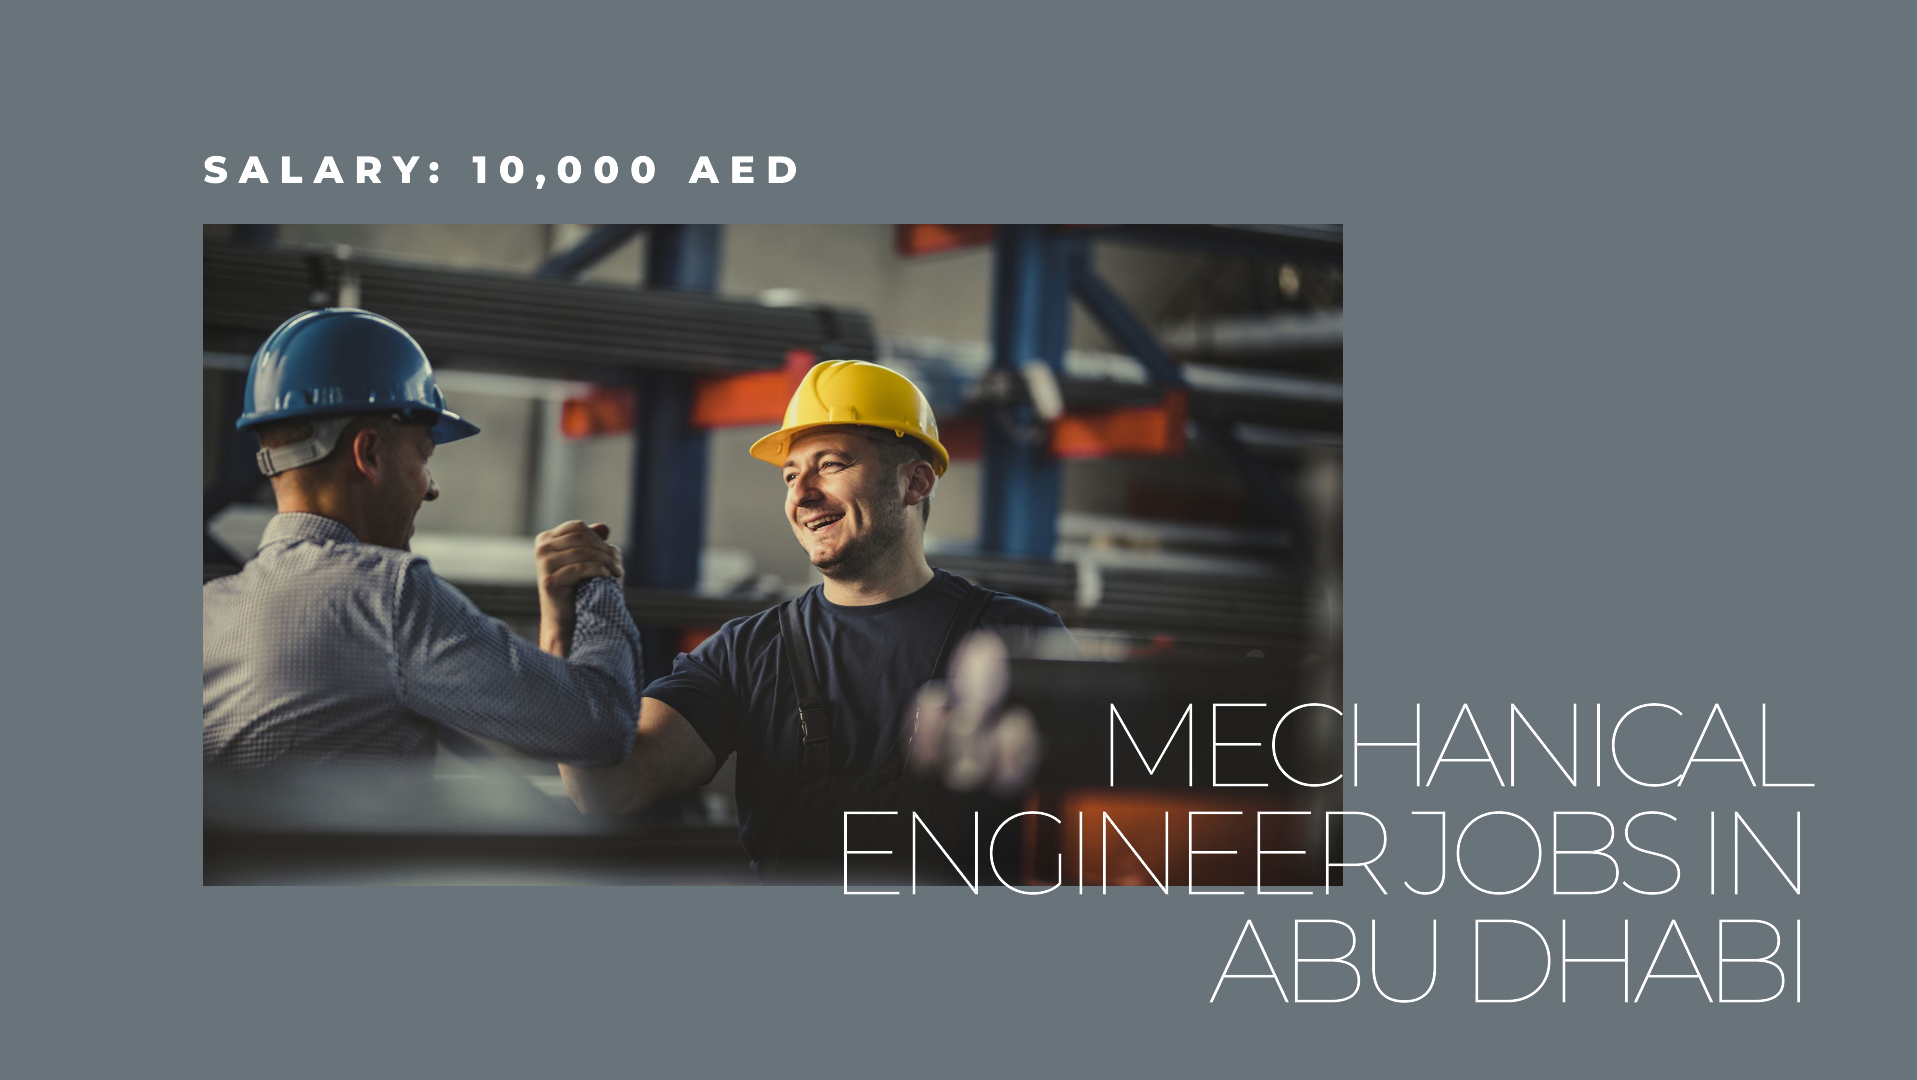 mechanical engineer jobs in abu dhabi with salary 10,000 AED